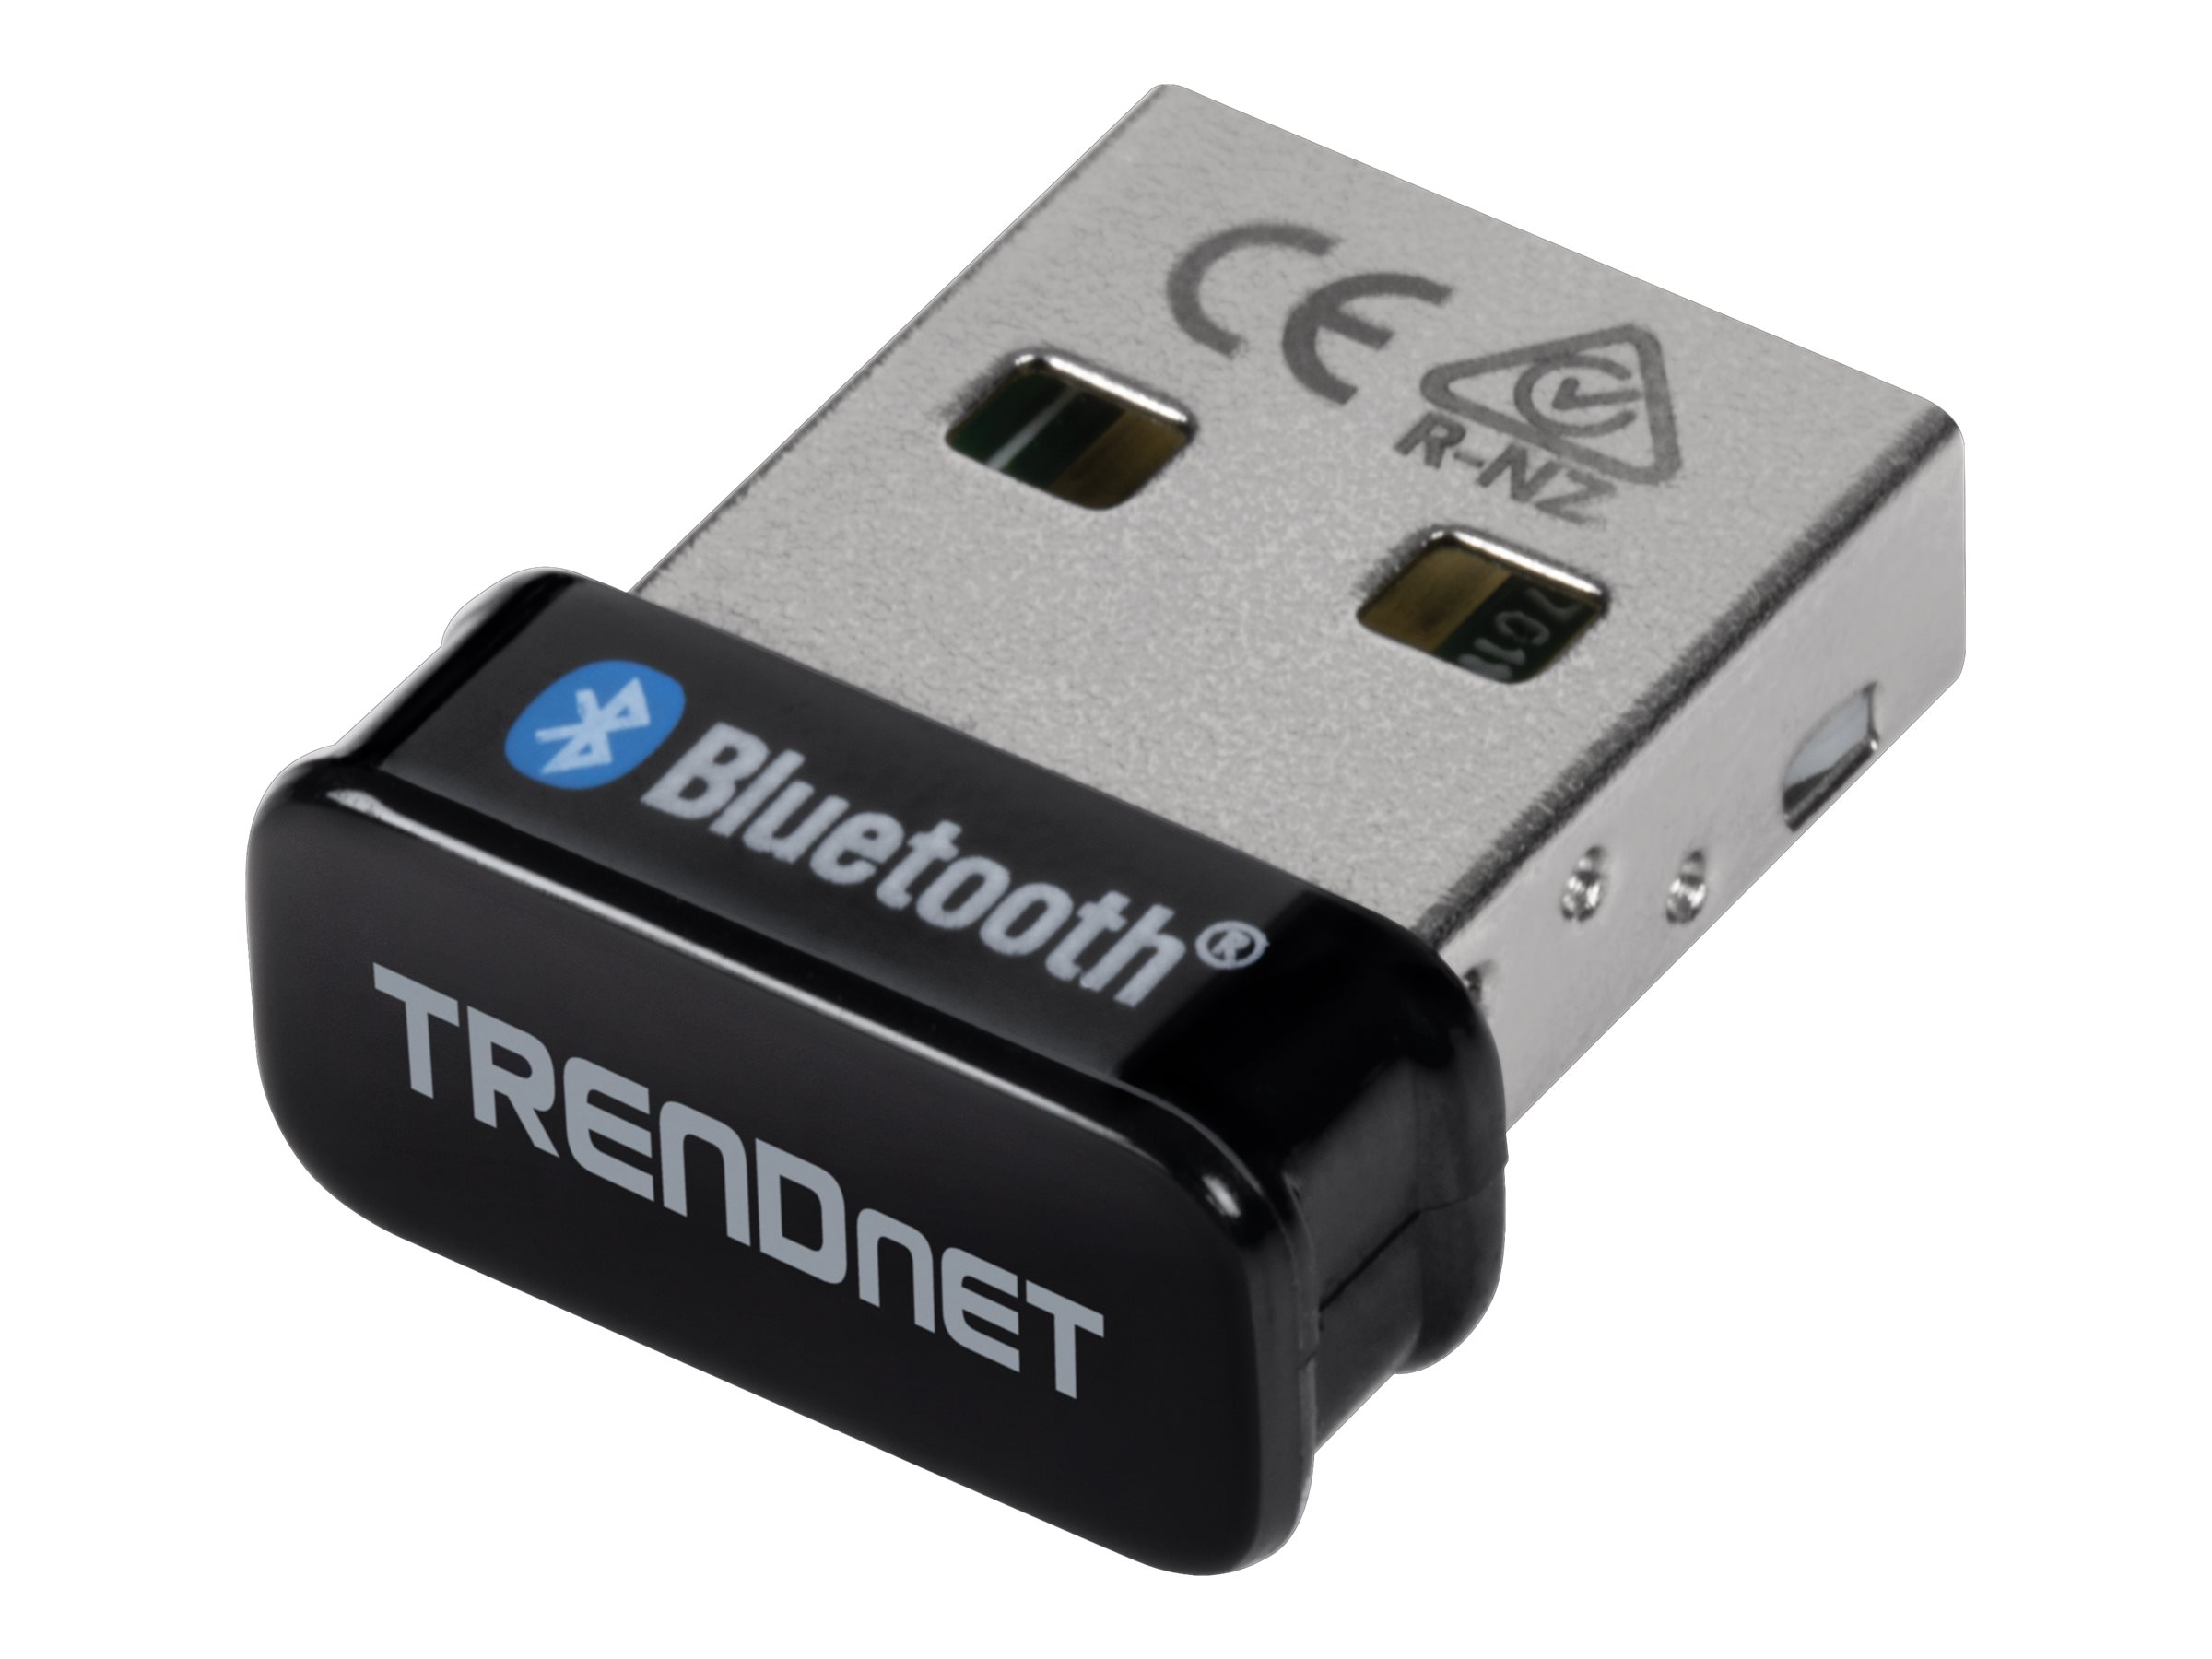 TrendNet Micro Bluetooth 5.0 USB Adapter